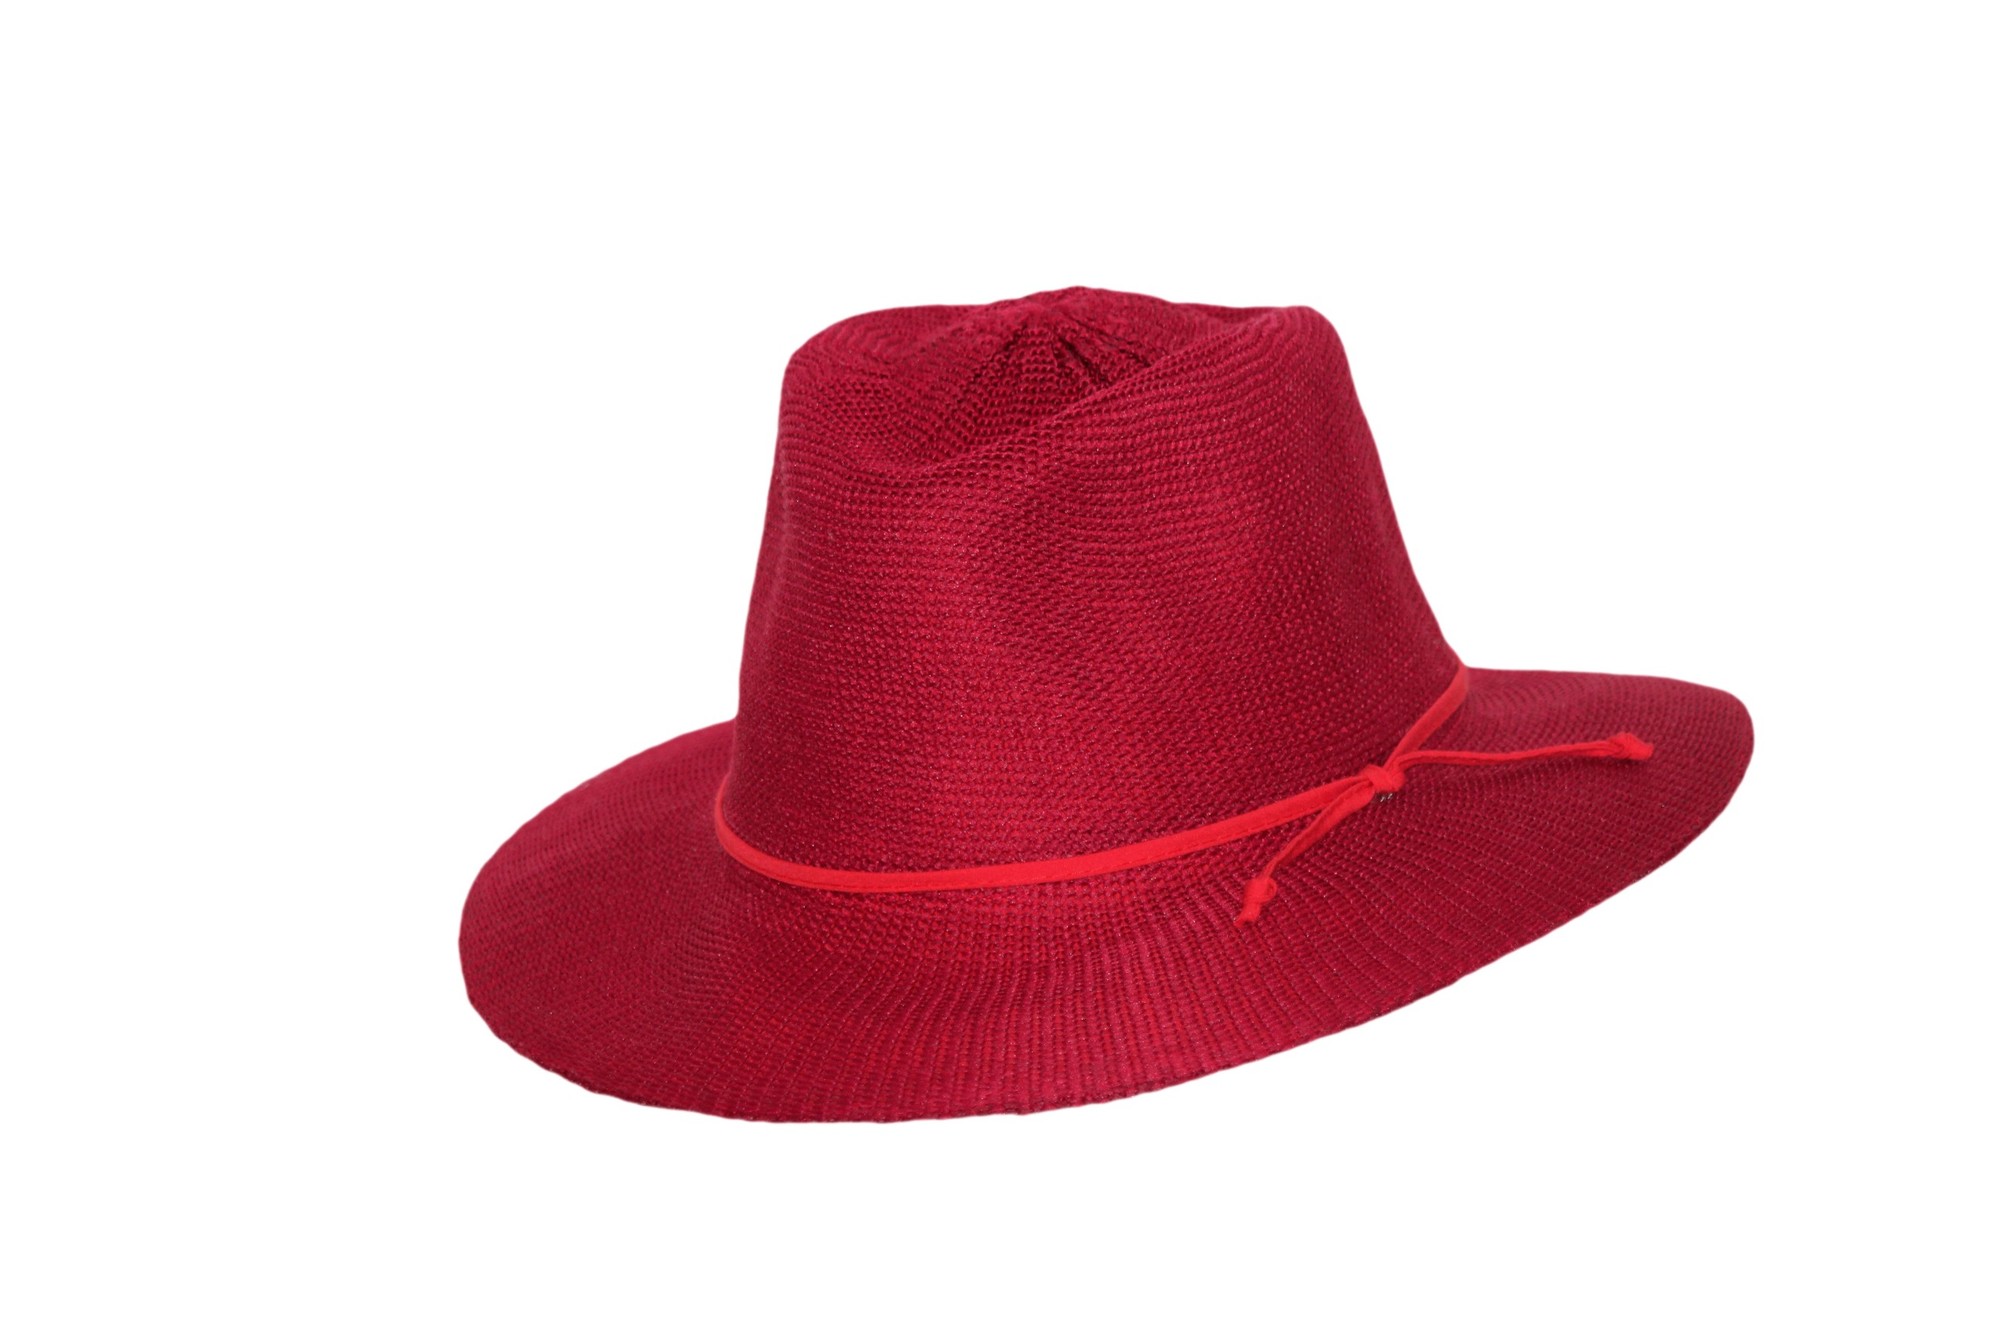 Rigon - UV fedora hat for women - Jacqui - Poppy red